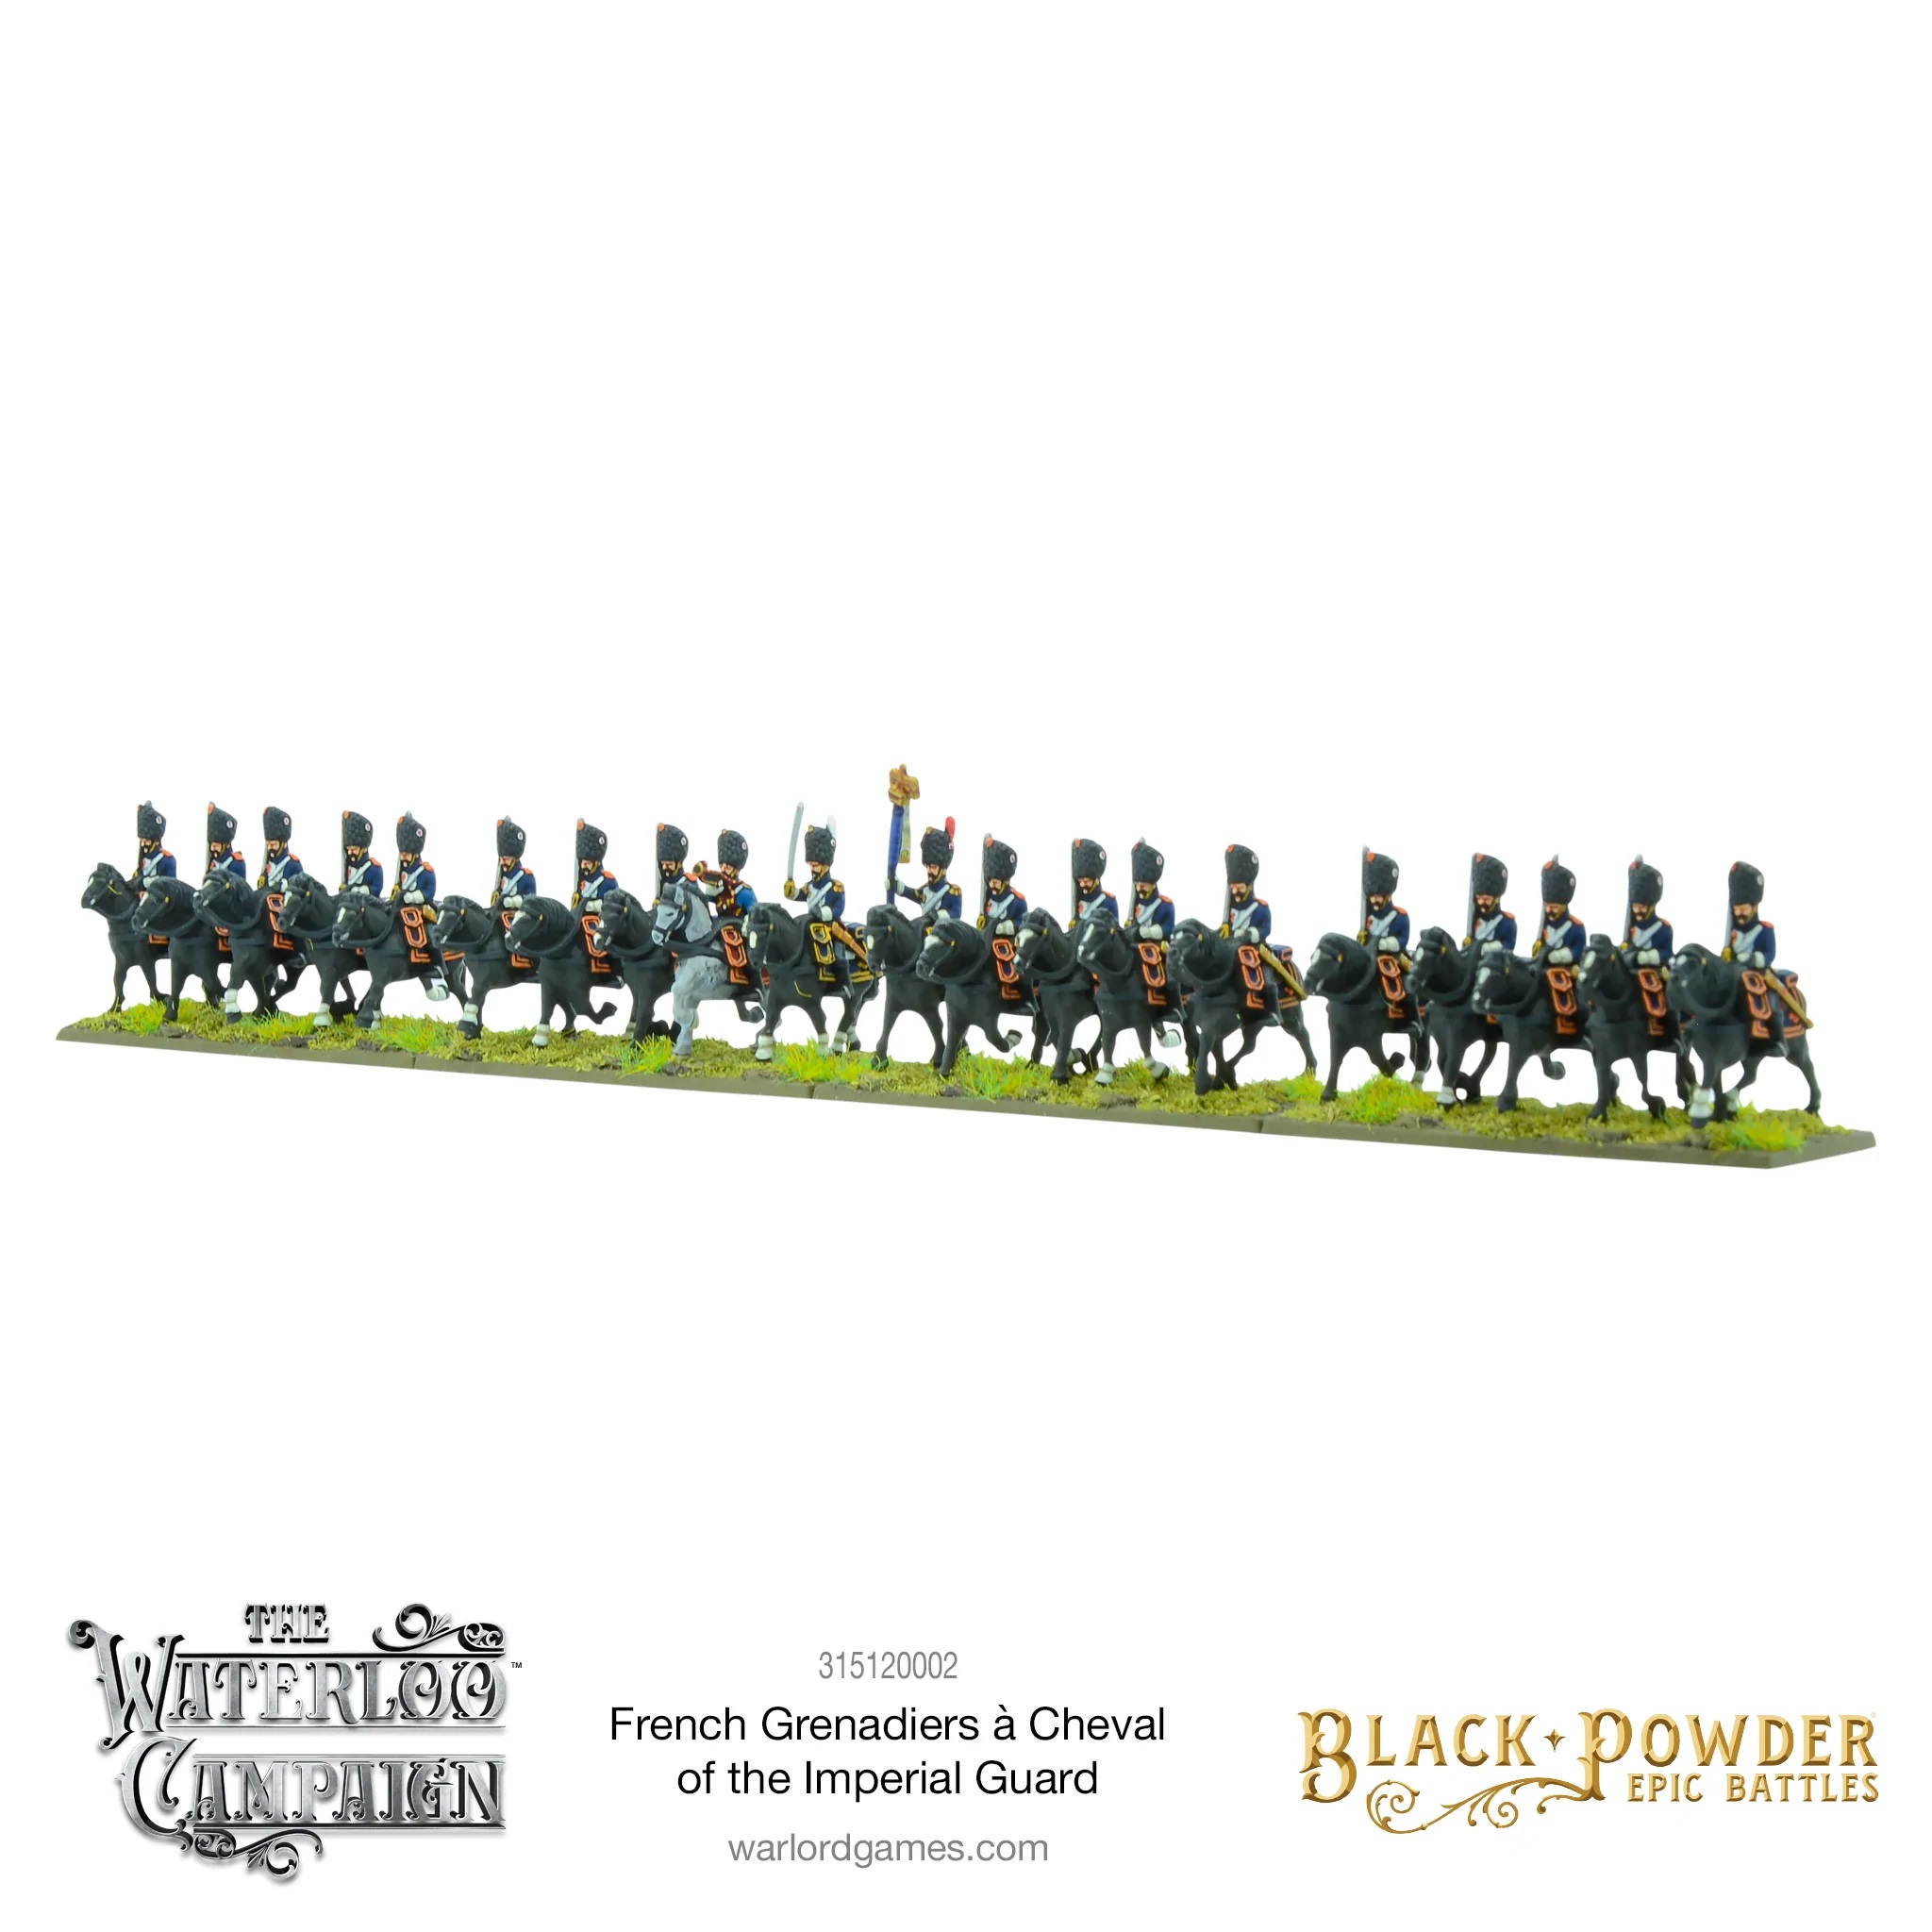 French Grenadiers a Cheval - Black Powder Epic Battles